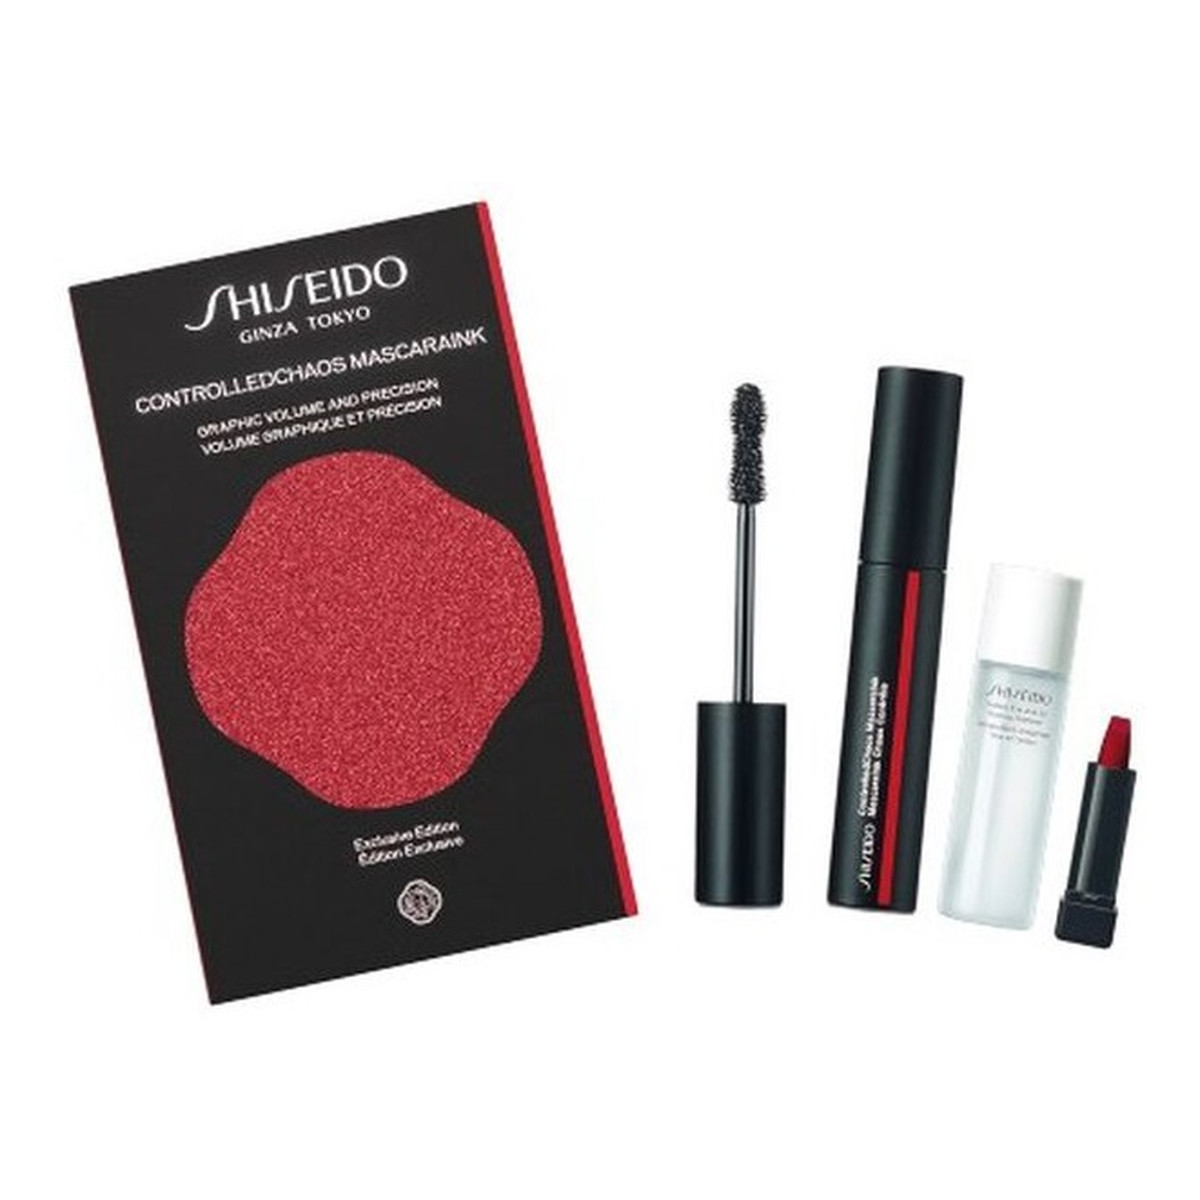 Shiseido Exclusive Edition Zestaw controlled chaos mascaralnk 01 black pulse 11.5ml + instant eye and lip makeup remover 30ml + modernmatte powder lipstick 515 mellow drama 2.5g